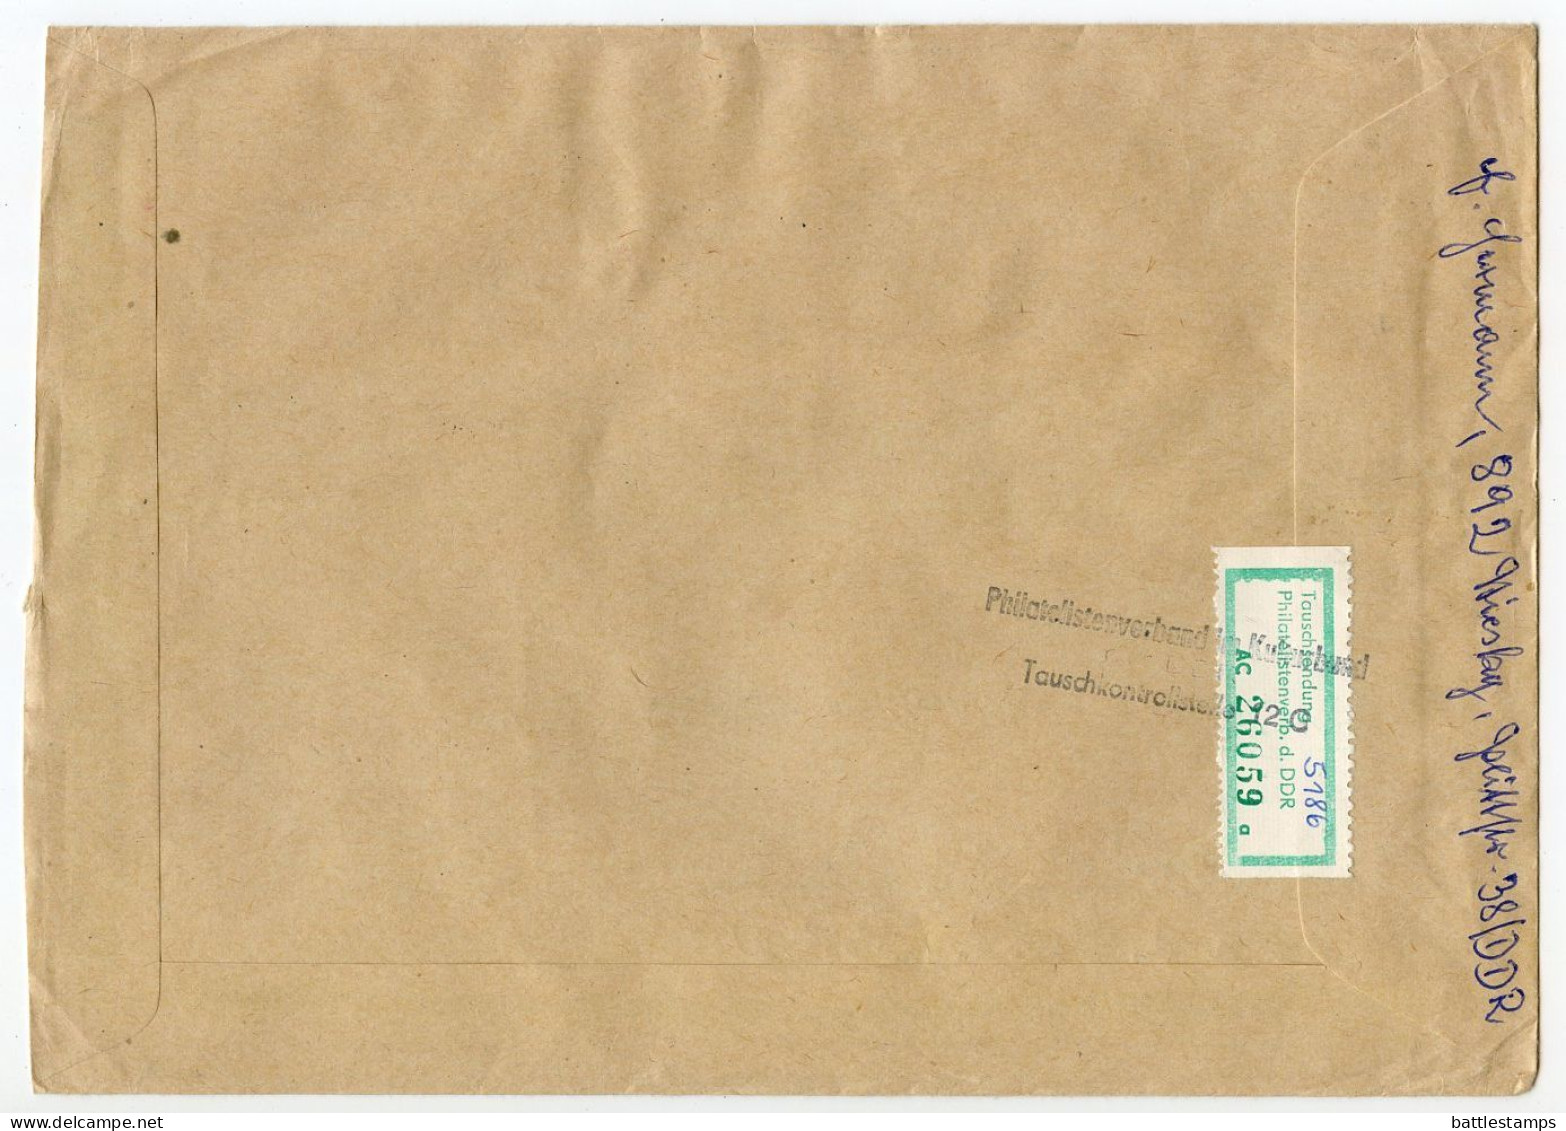 Germany East 1979 Registered Cover; Görlitz To Vienenburg; Circus & Other Stamps; Tauschsendung (Exchange Control) Label - Brieven En Documenten